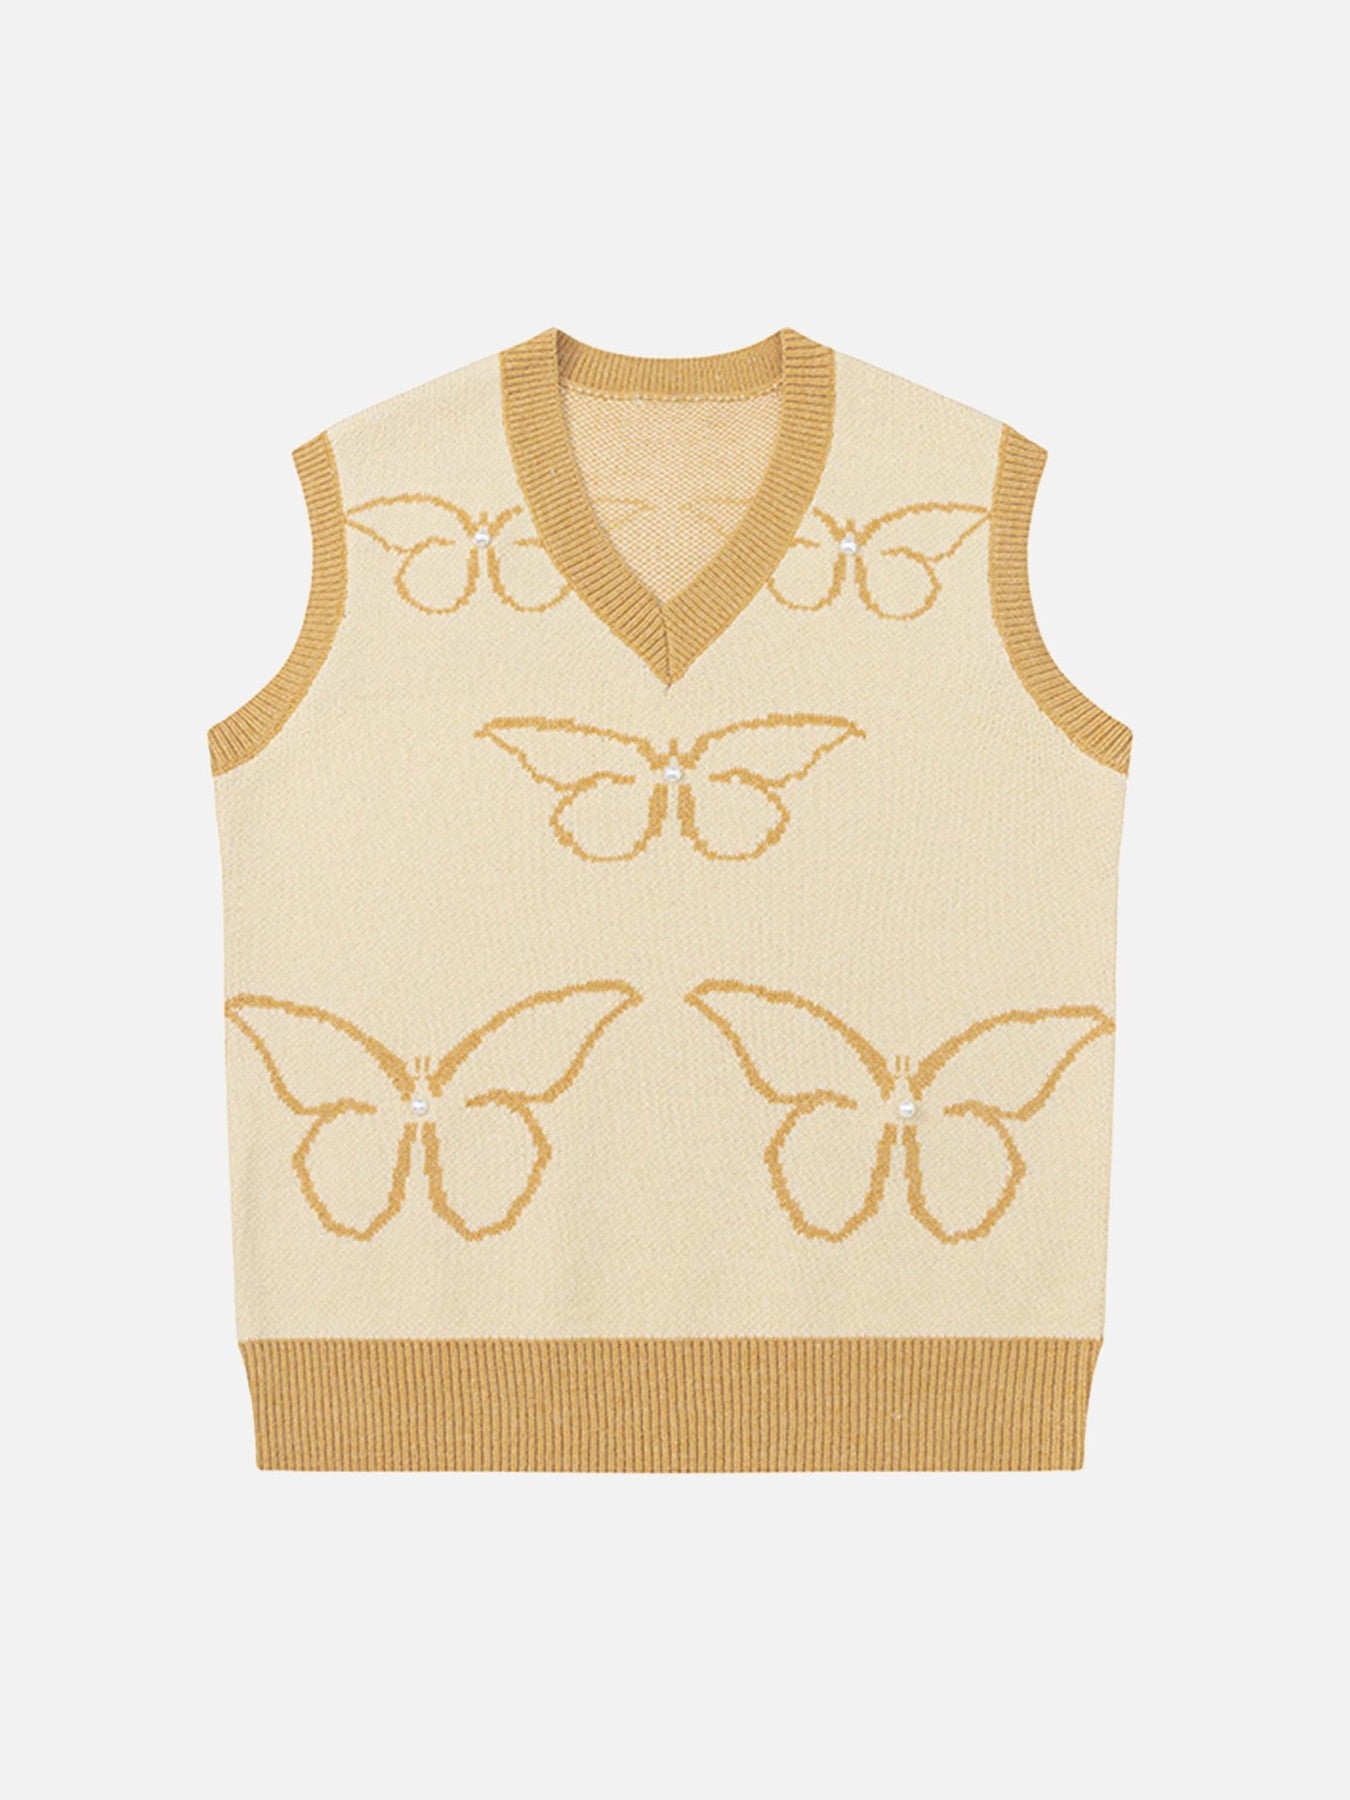 Thesupermade Vintage Butterfly V-Neck Vest Sweater